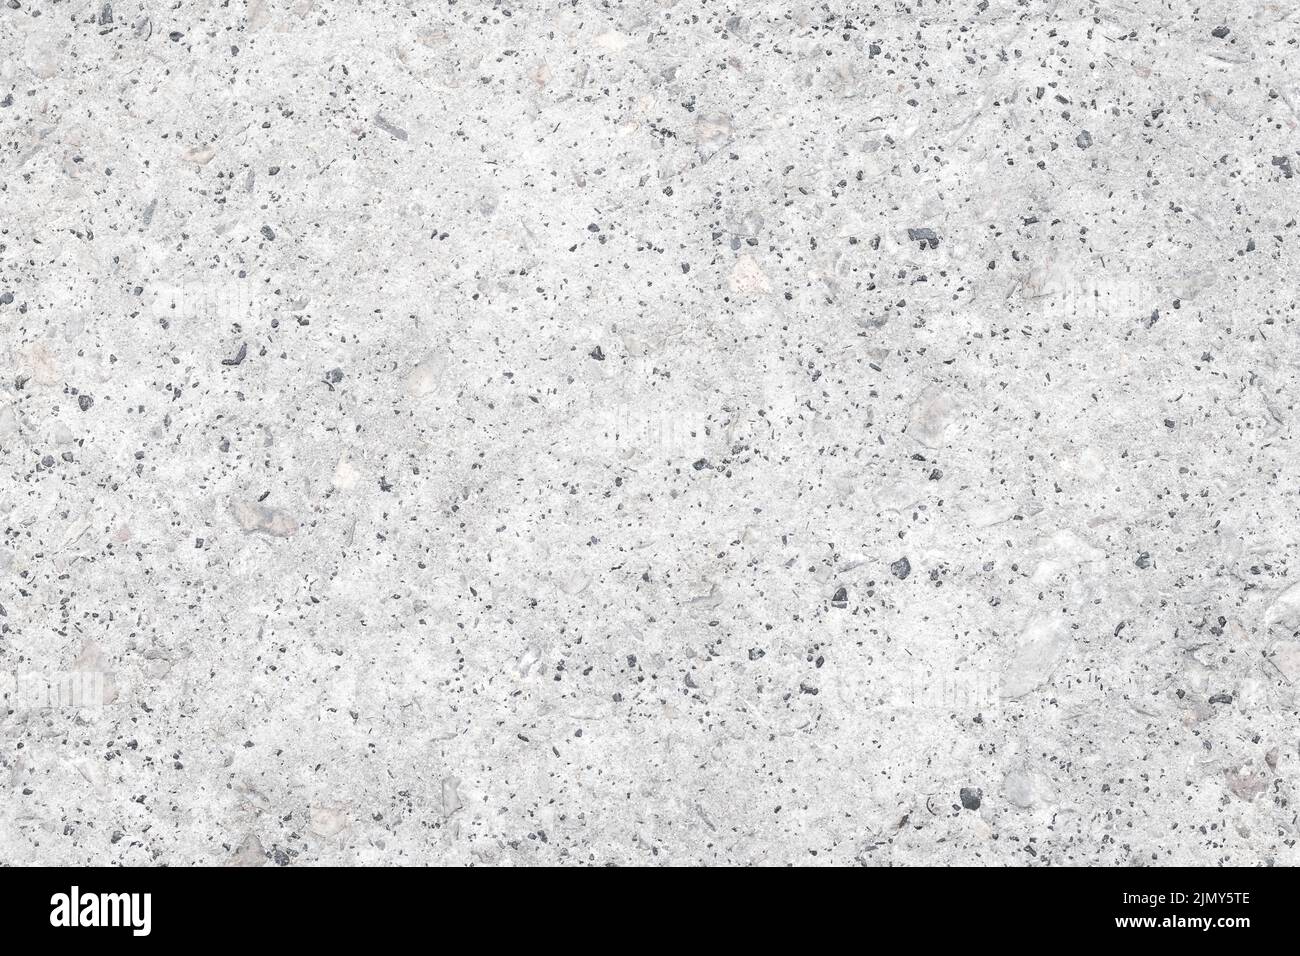 Textura de granito, pared de hormigón gris rugoso natural. Diseño de suelo de baldosas gris, pared urbana granulada, superficie de cemento moteado. Plantilla con Foto de stock